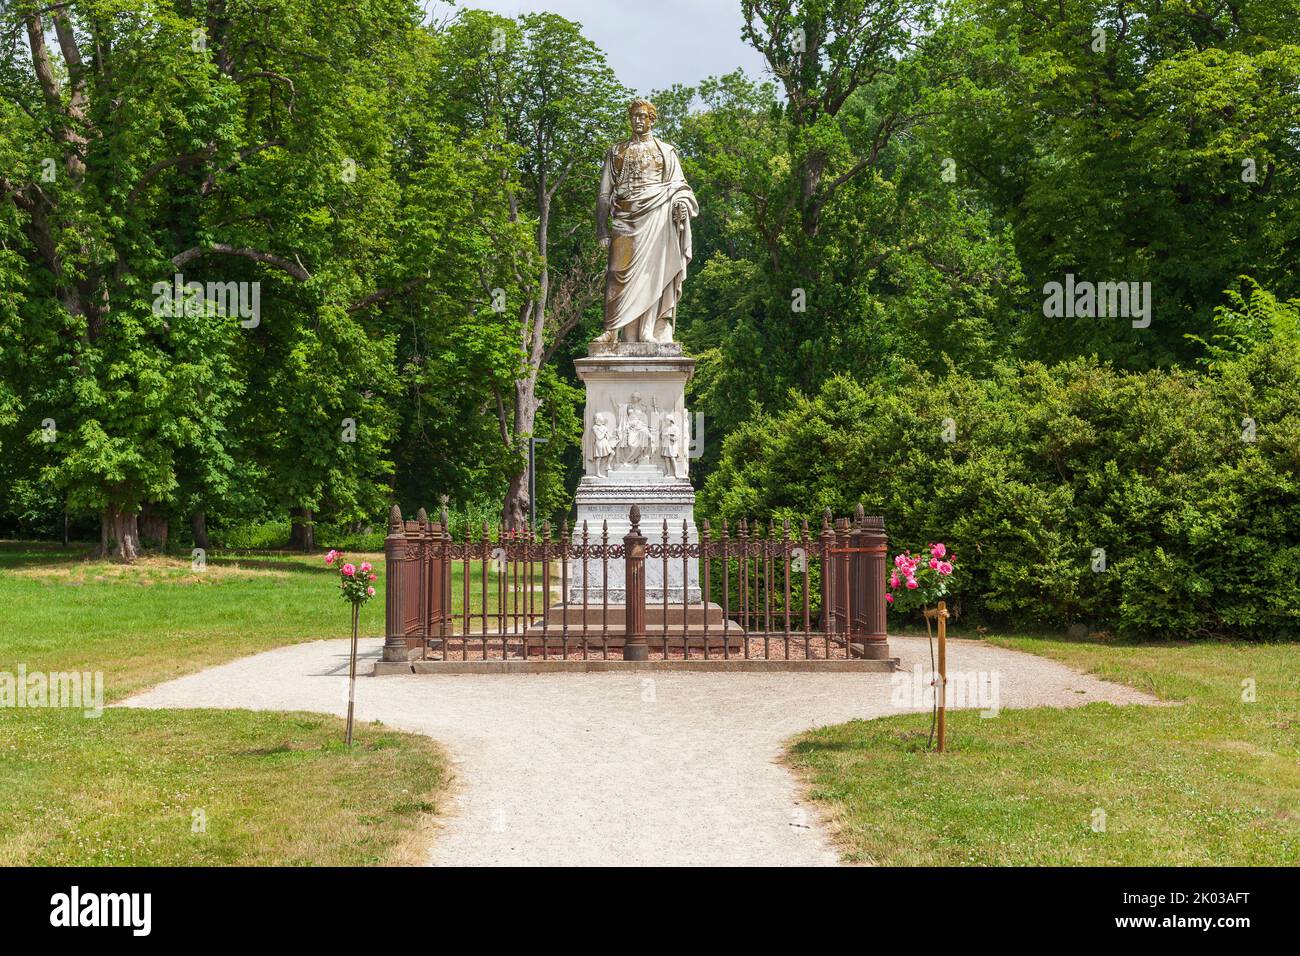 Malte monument in the castle park, Putbus, Rügen Island, Mecklenburg-Western Pomerania, Germany, Europe Stock Photo